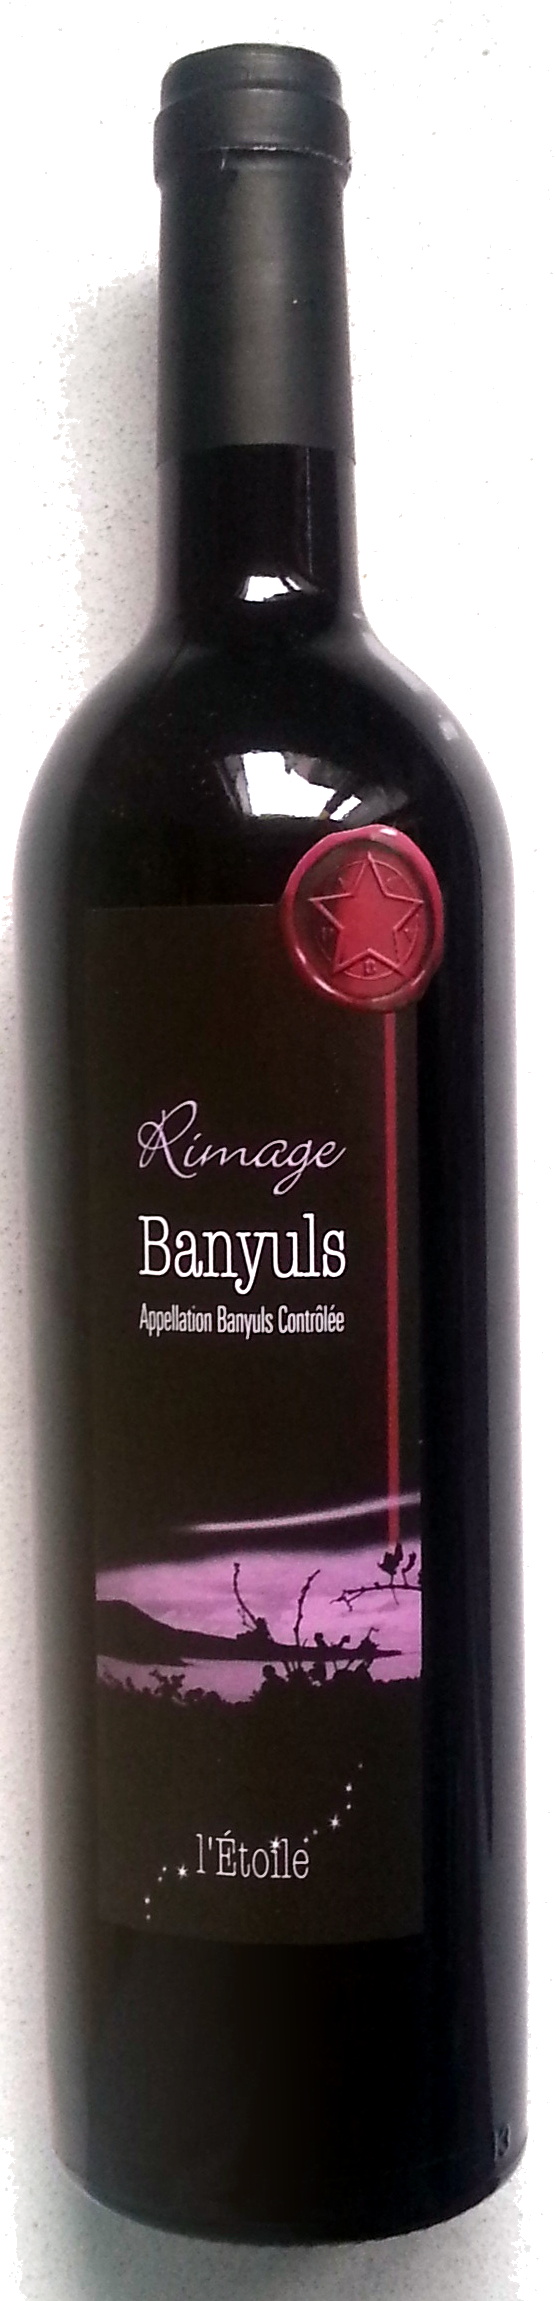 Rimage Banyuls 2010 - Produkt - fr